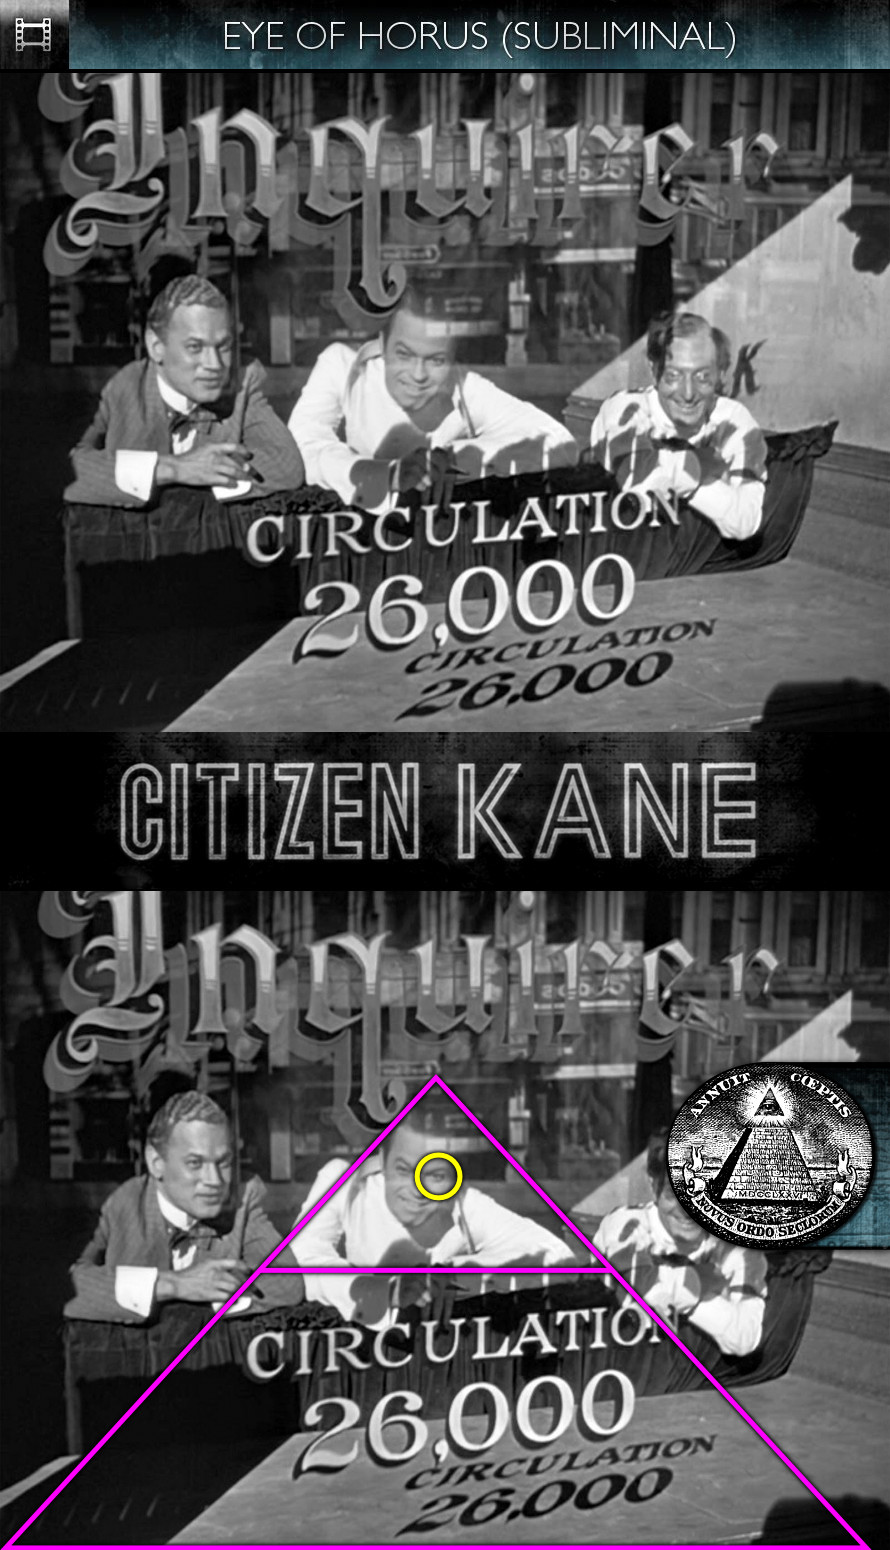 Citizen Kane (1941) - Eye of Horus - Subliminal